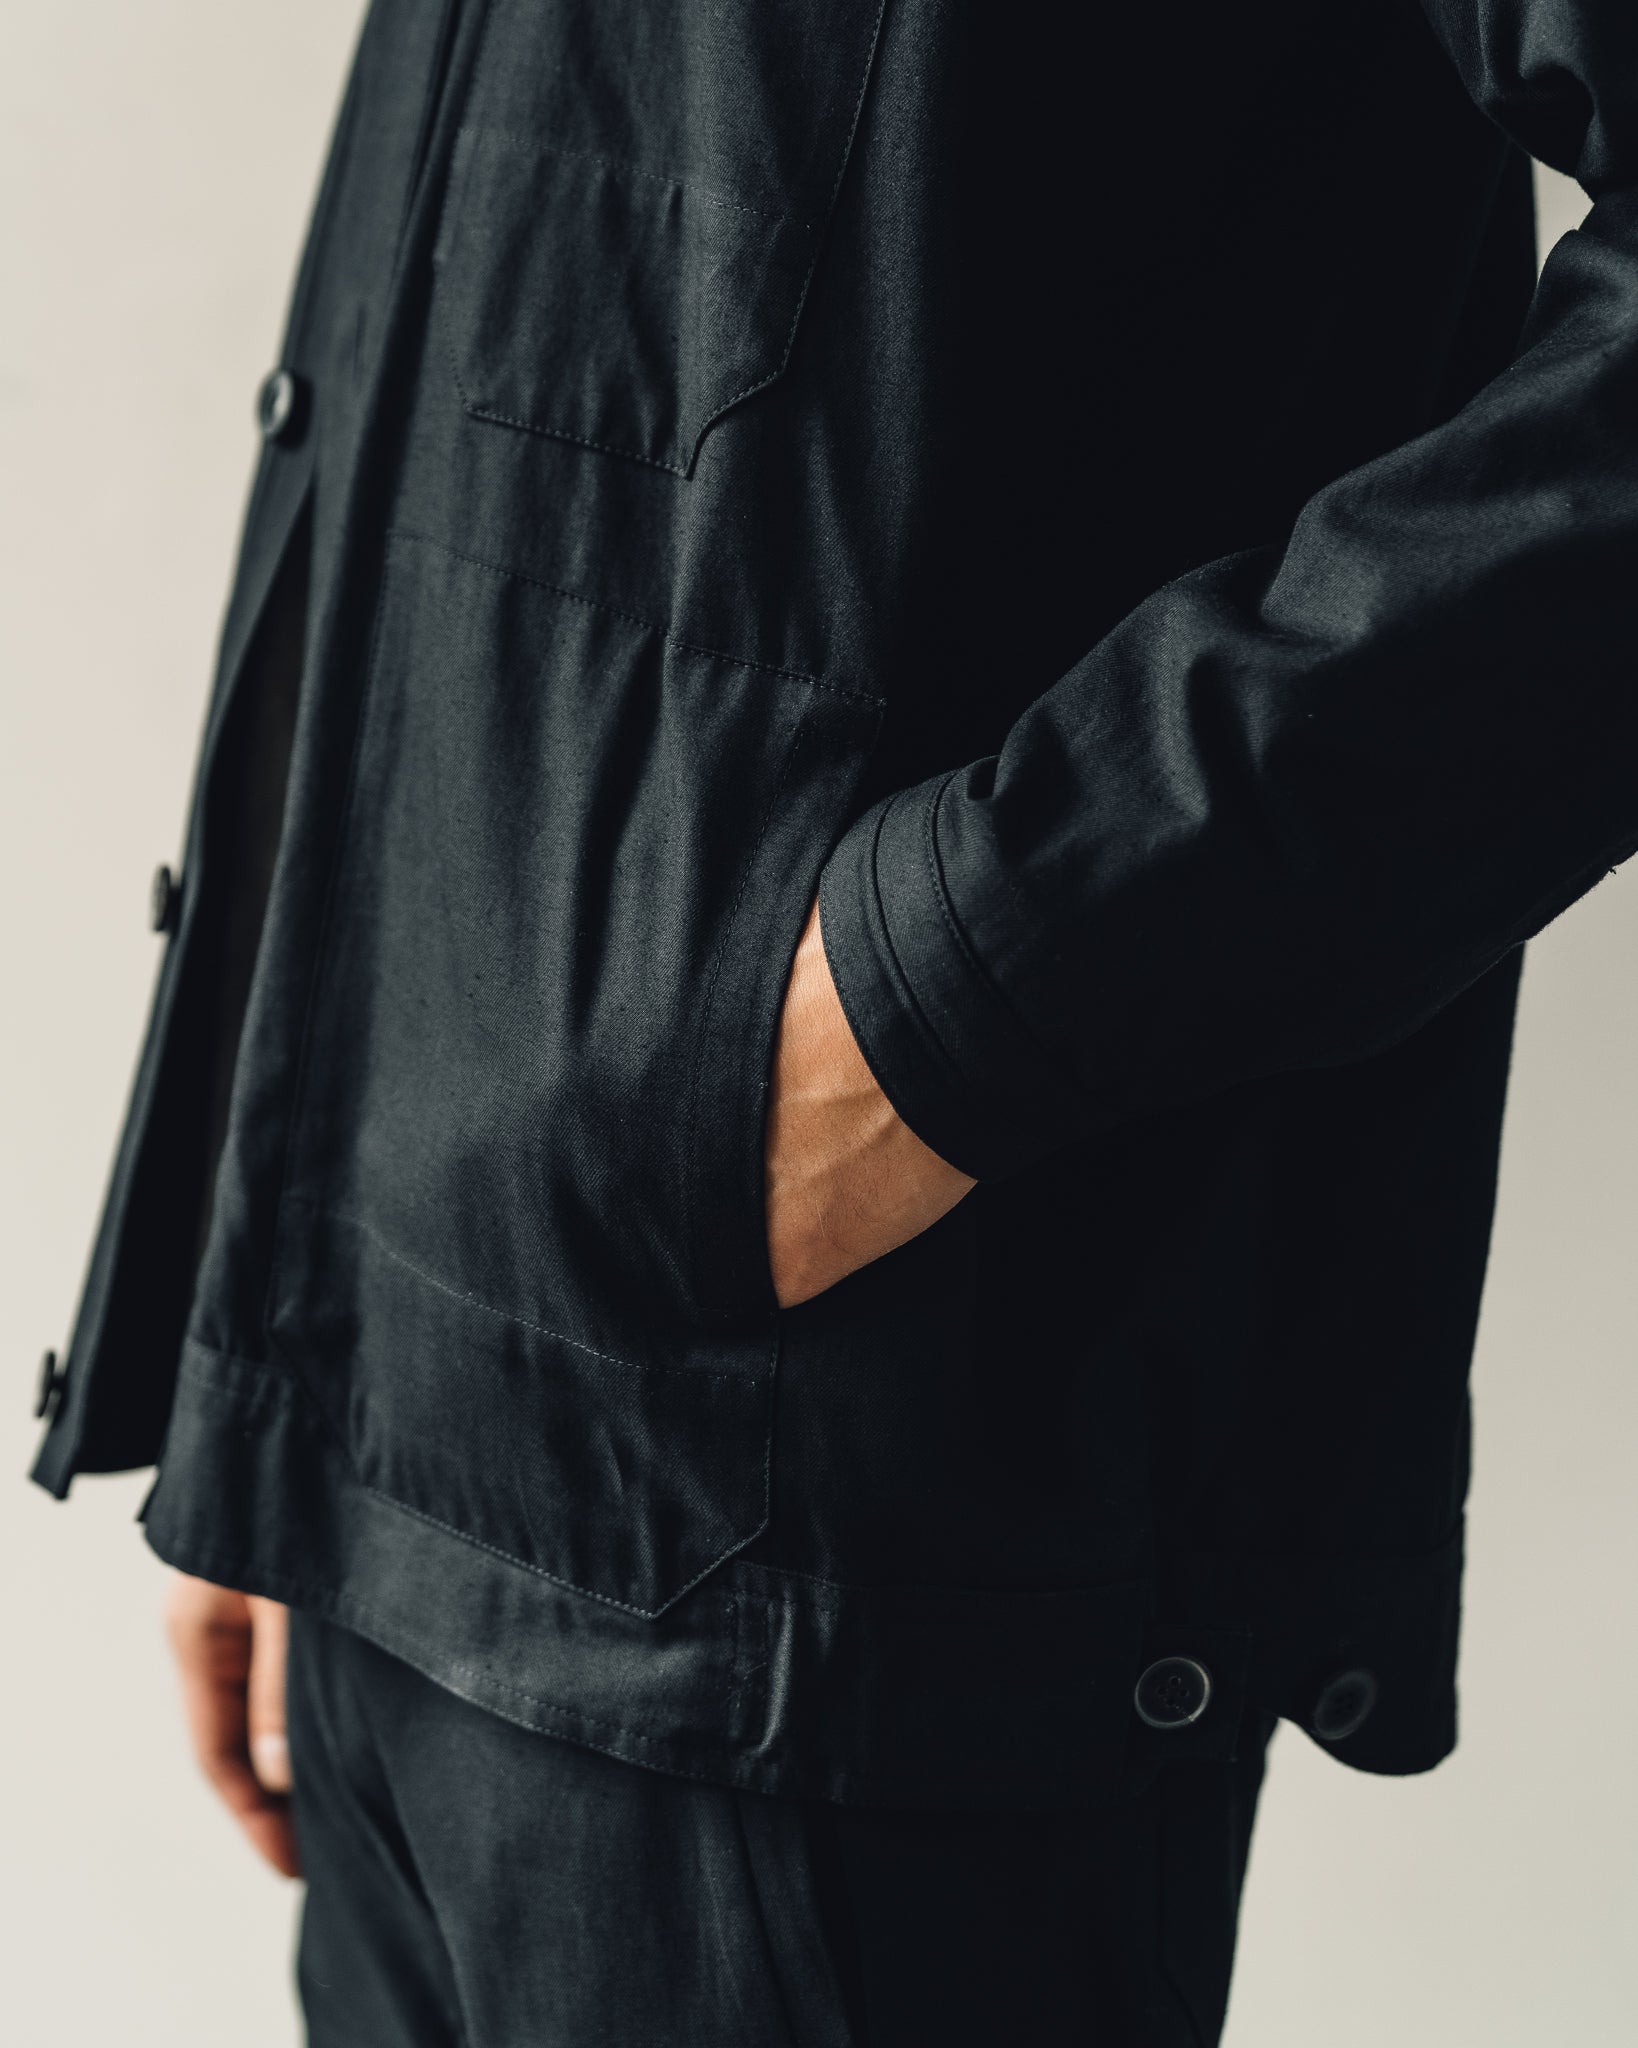 Jan-Jan Van Essche Jacket #30, Black Soft Twill